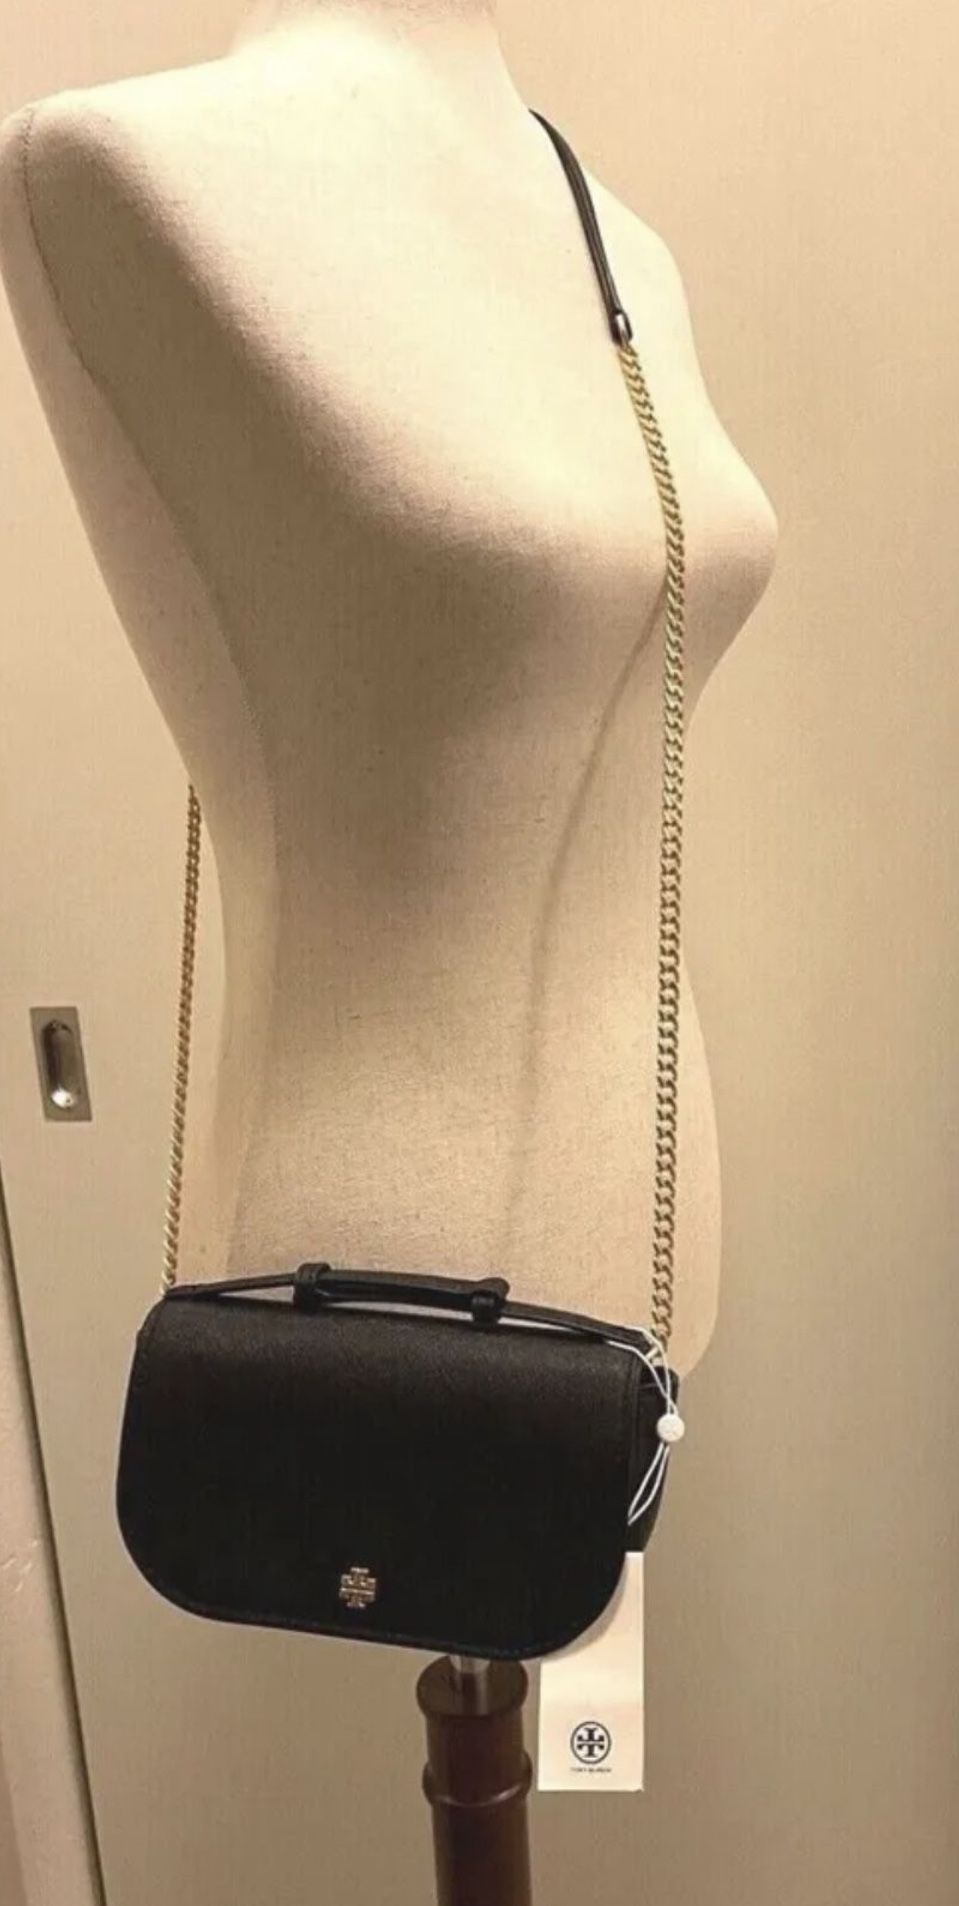 Tory Burch Emerson Adjustable Shoulder Bag for Sale in Atlanta, GA - OfferUp